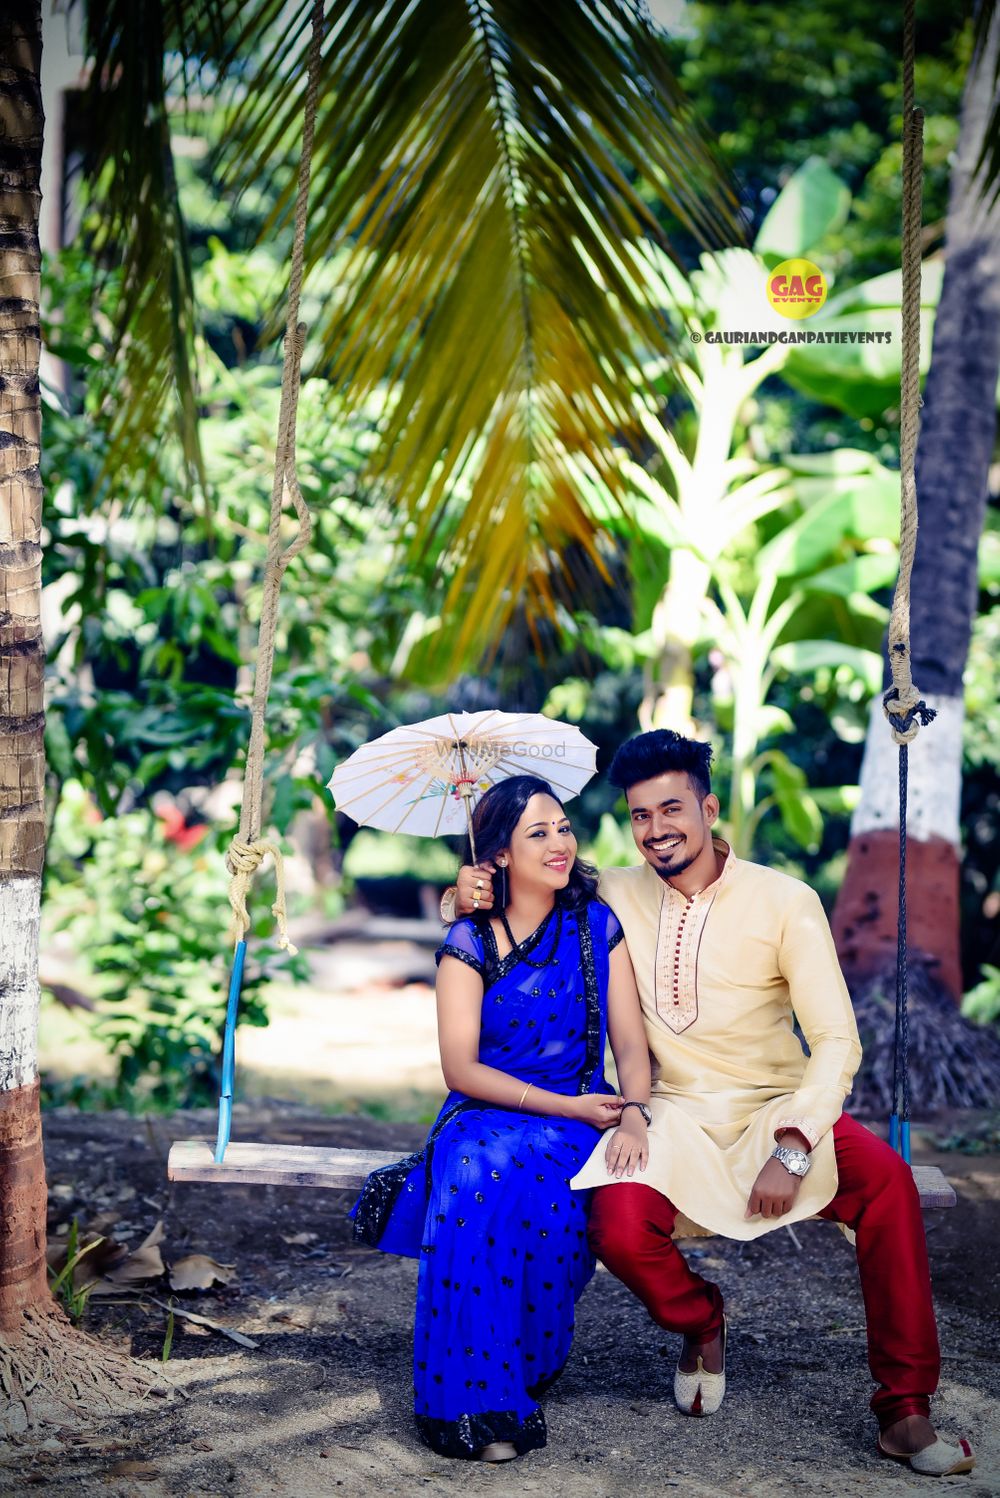 Photo From Satish + Harshali  Pre-Wedding - By Gauri And Ganpati Events